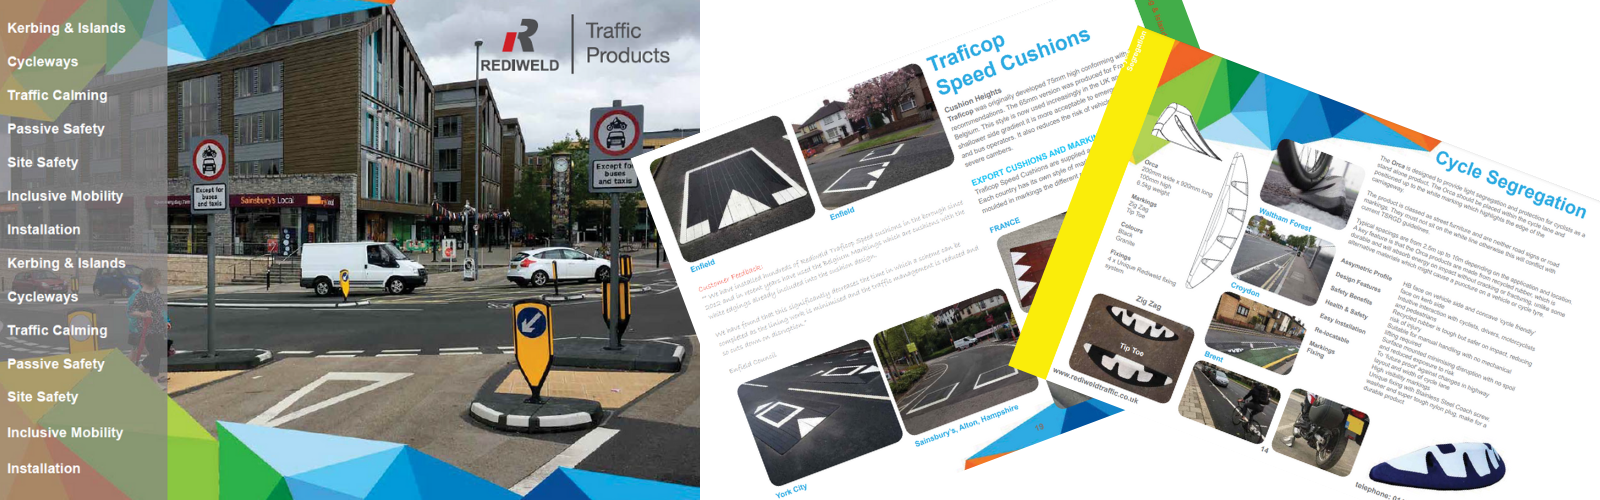 Products_Brochure_Rediweld_Traffic